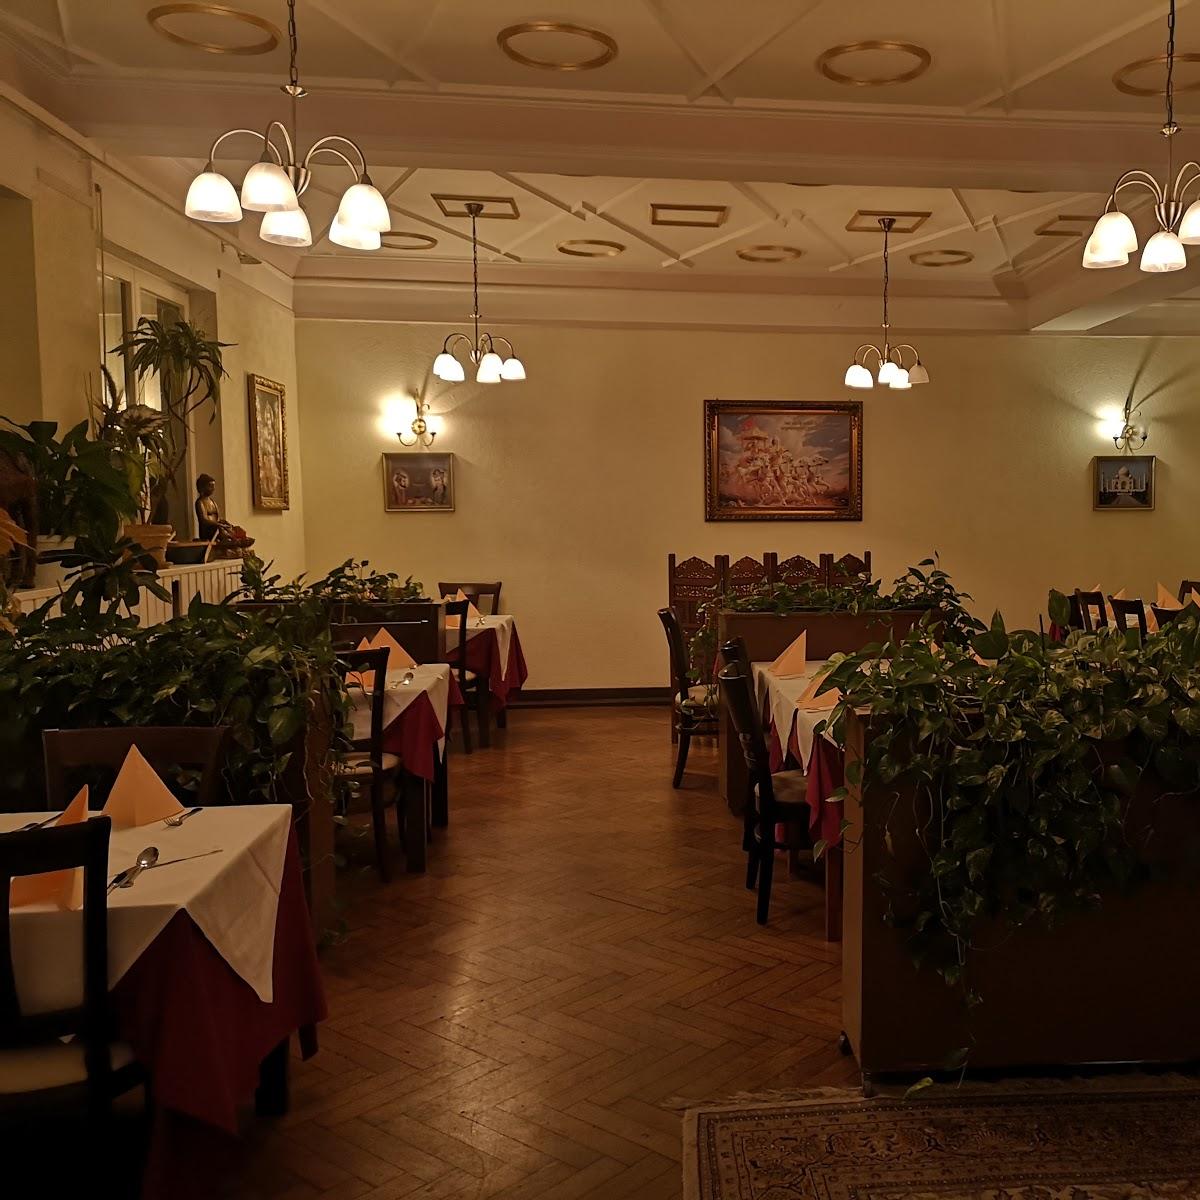 Restaurant "Restaurant Bombay Palace" in Karlsruhe